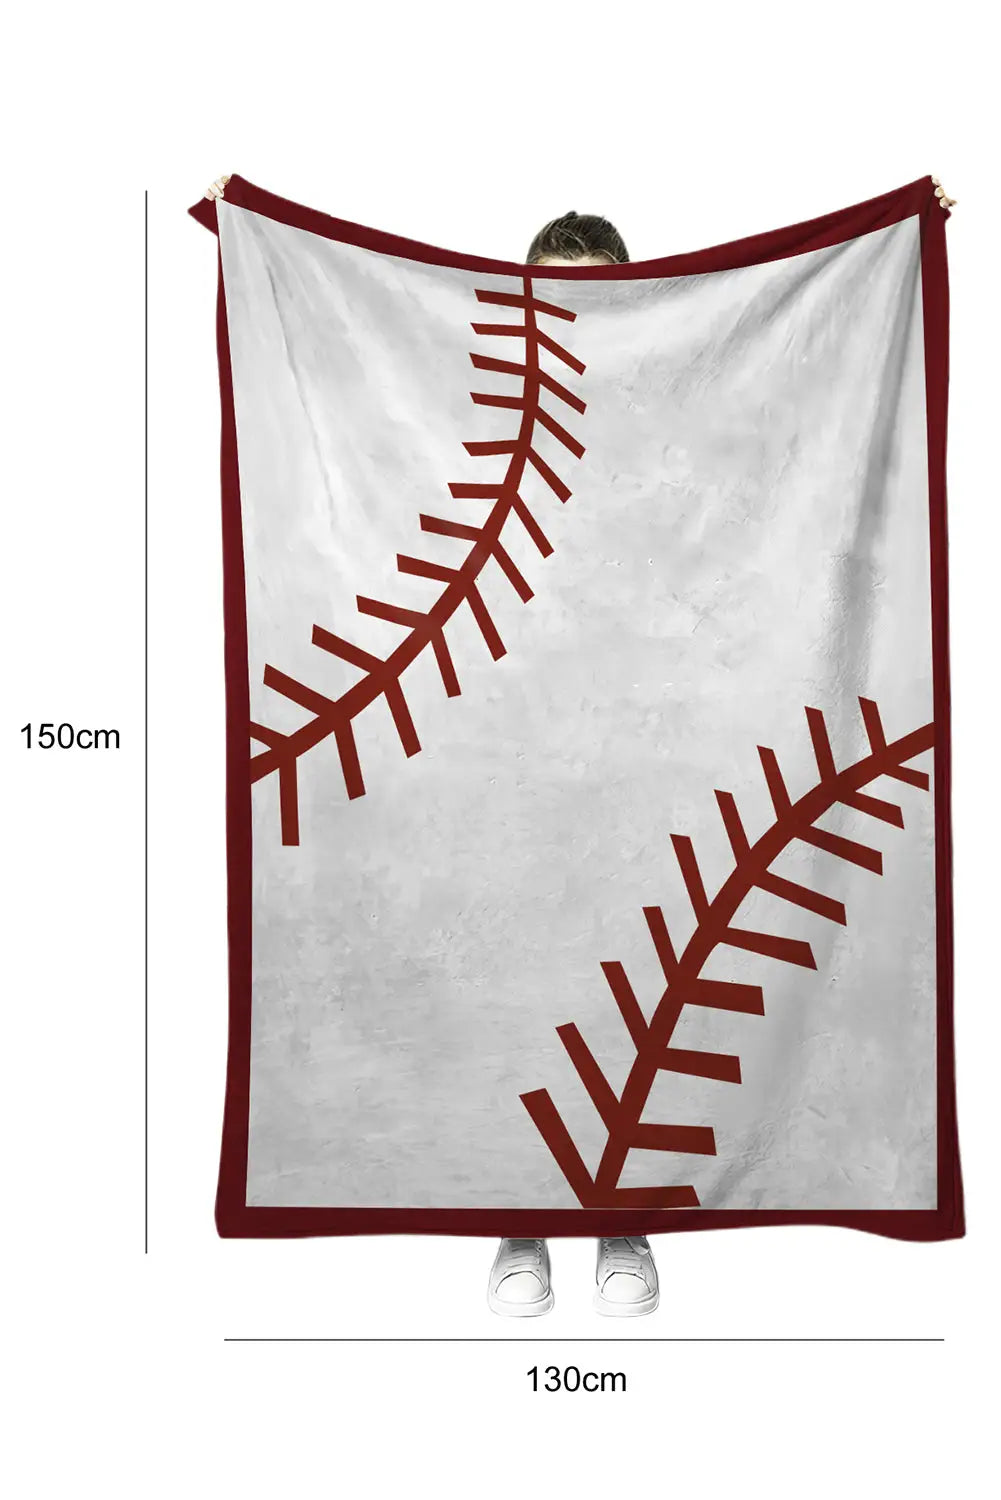 Chestnut ball game fashion fleece blanket 130*150cm - blankets